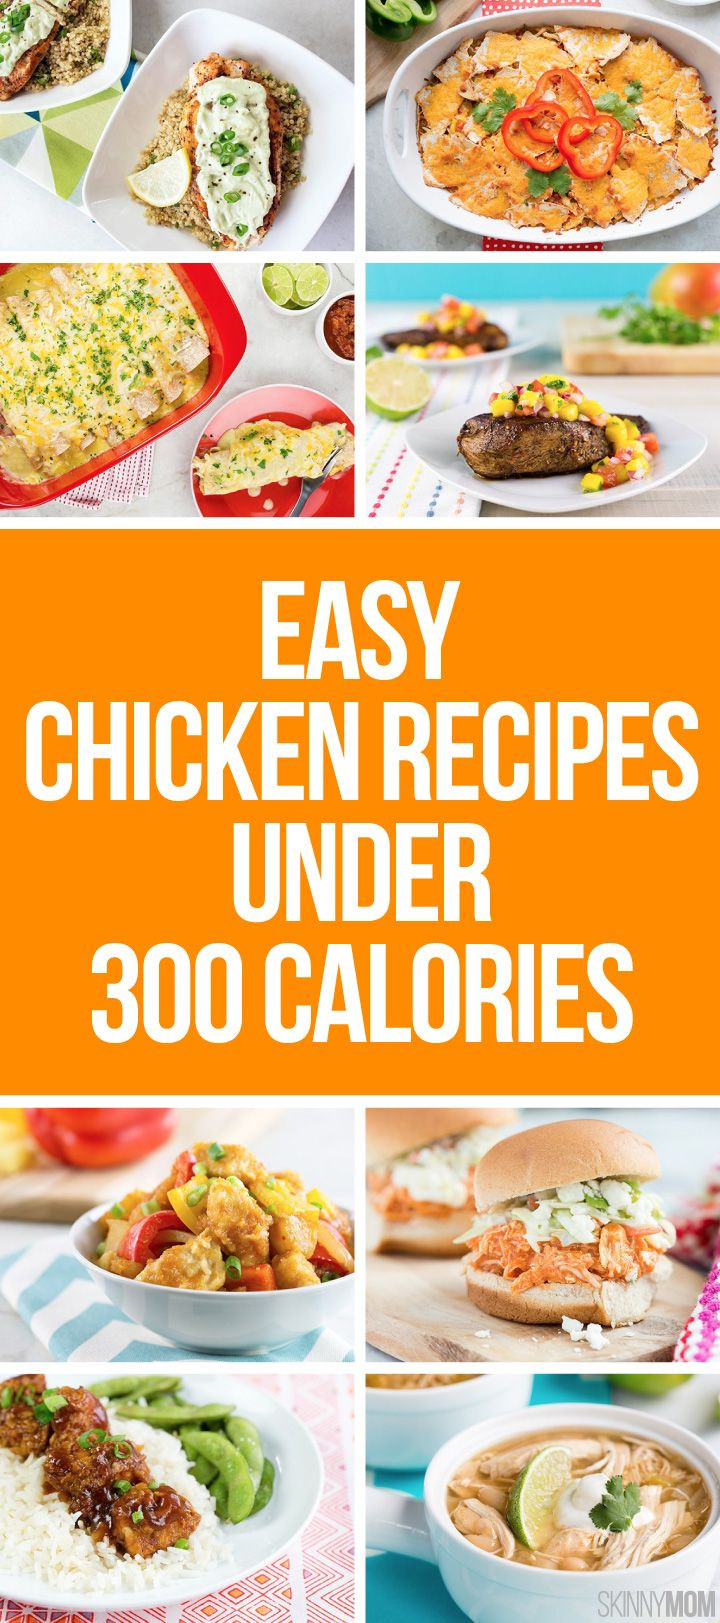 Low Calorie Boneless Chicken Recipes
 17 Chicken Recipes Under 300 Calories